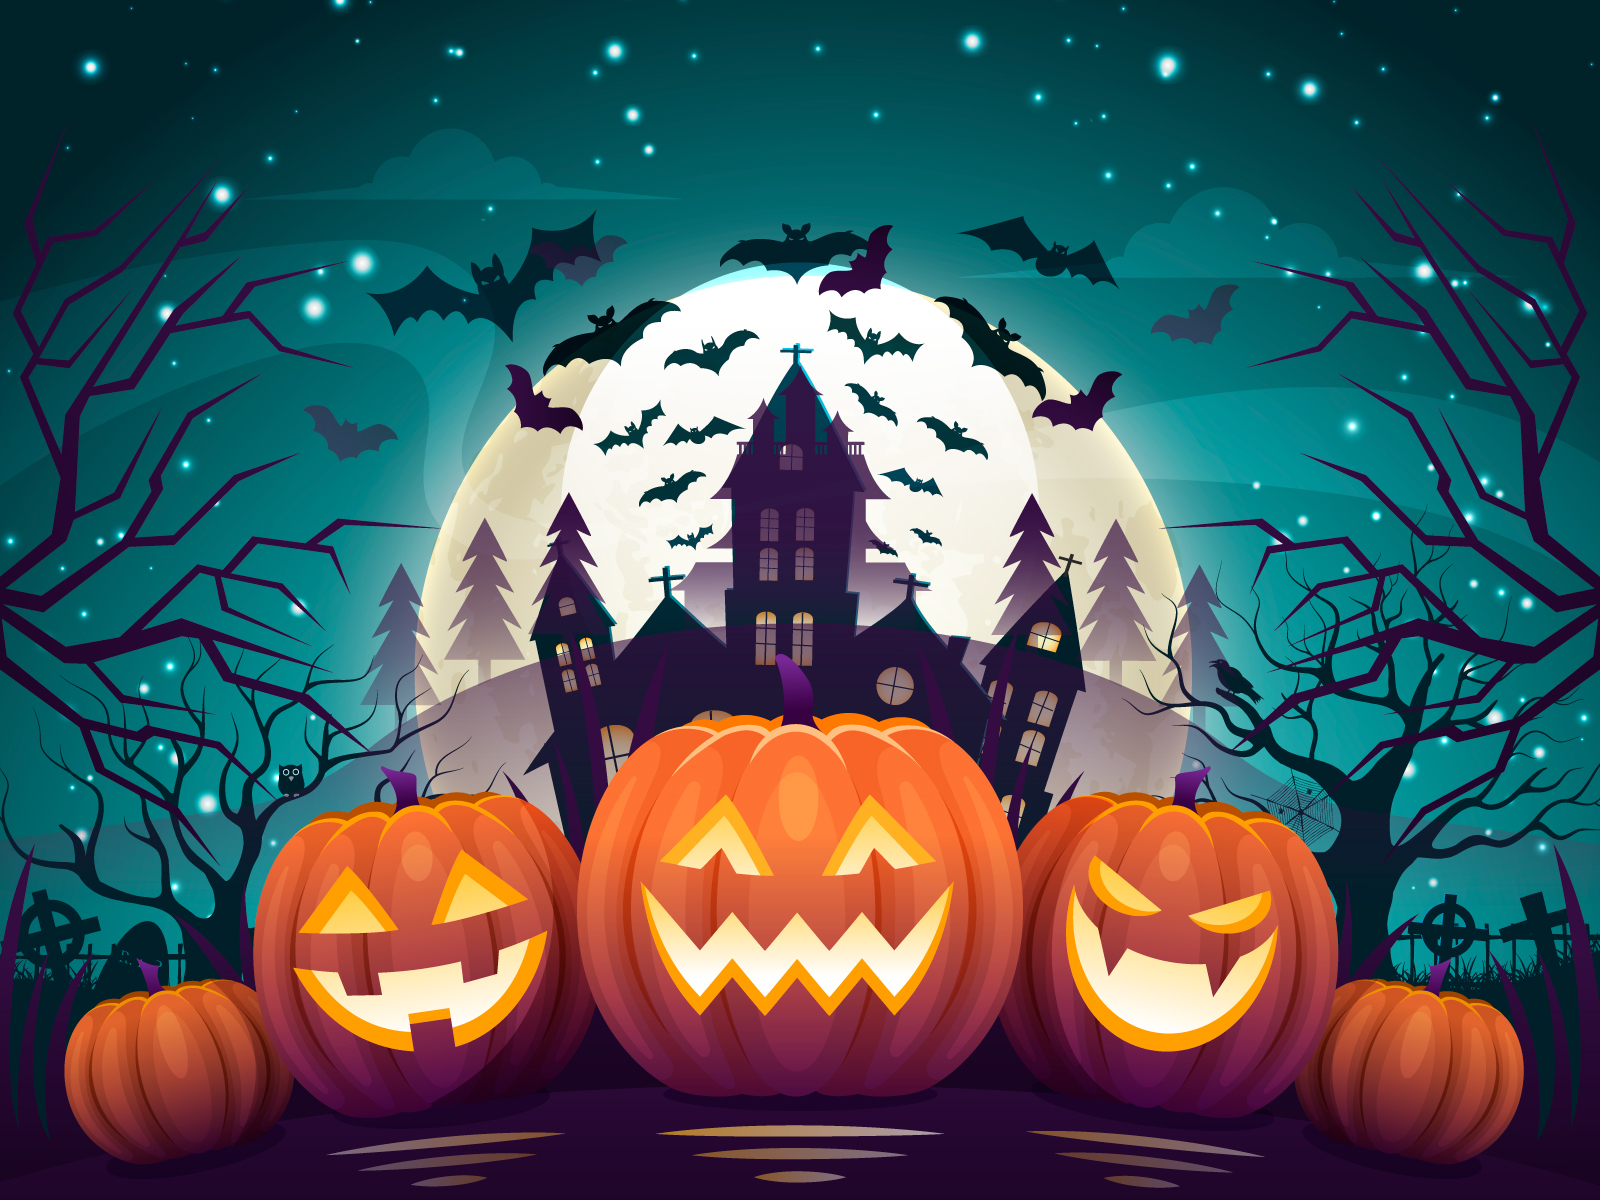 Happy Scary Halloween by Sarpreet Kalyan on Dribbble